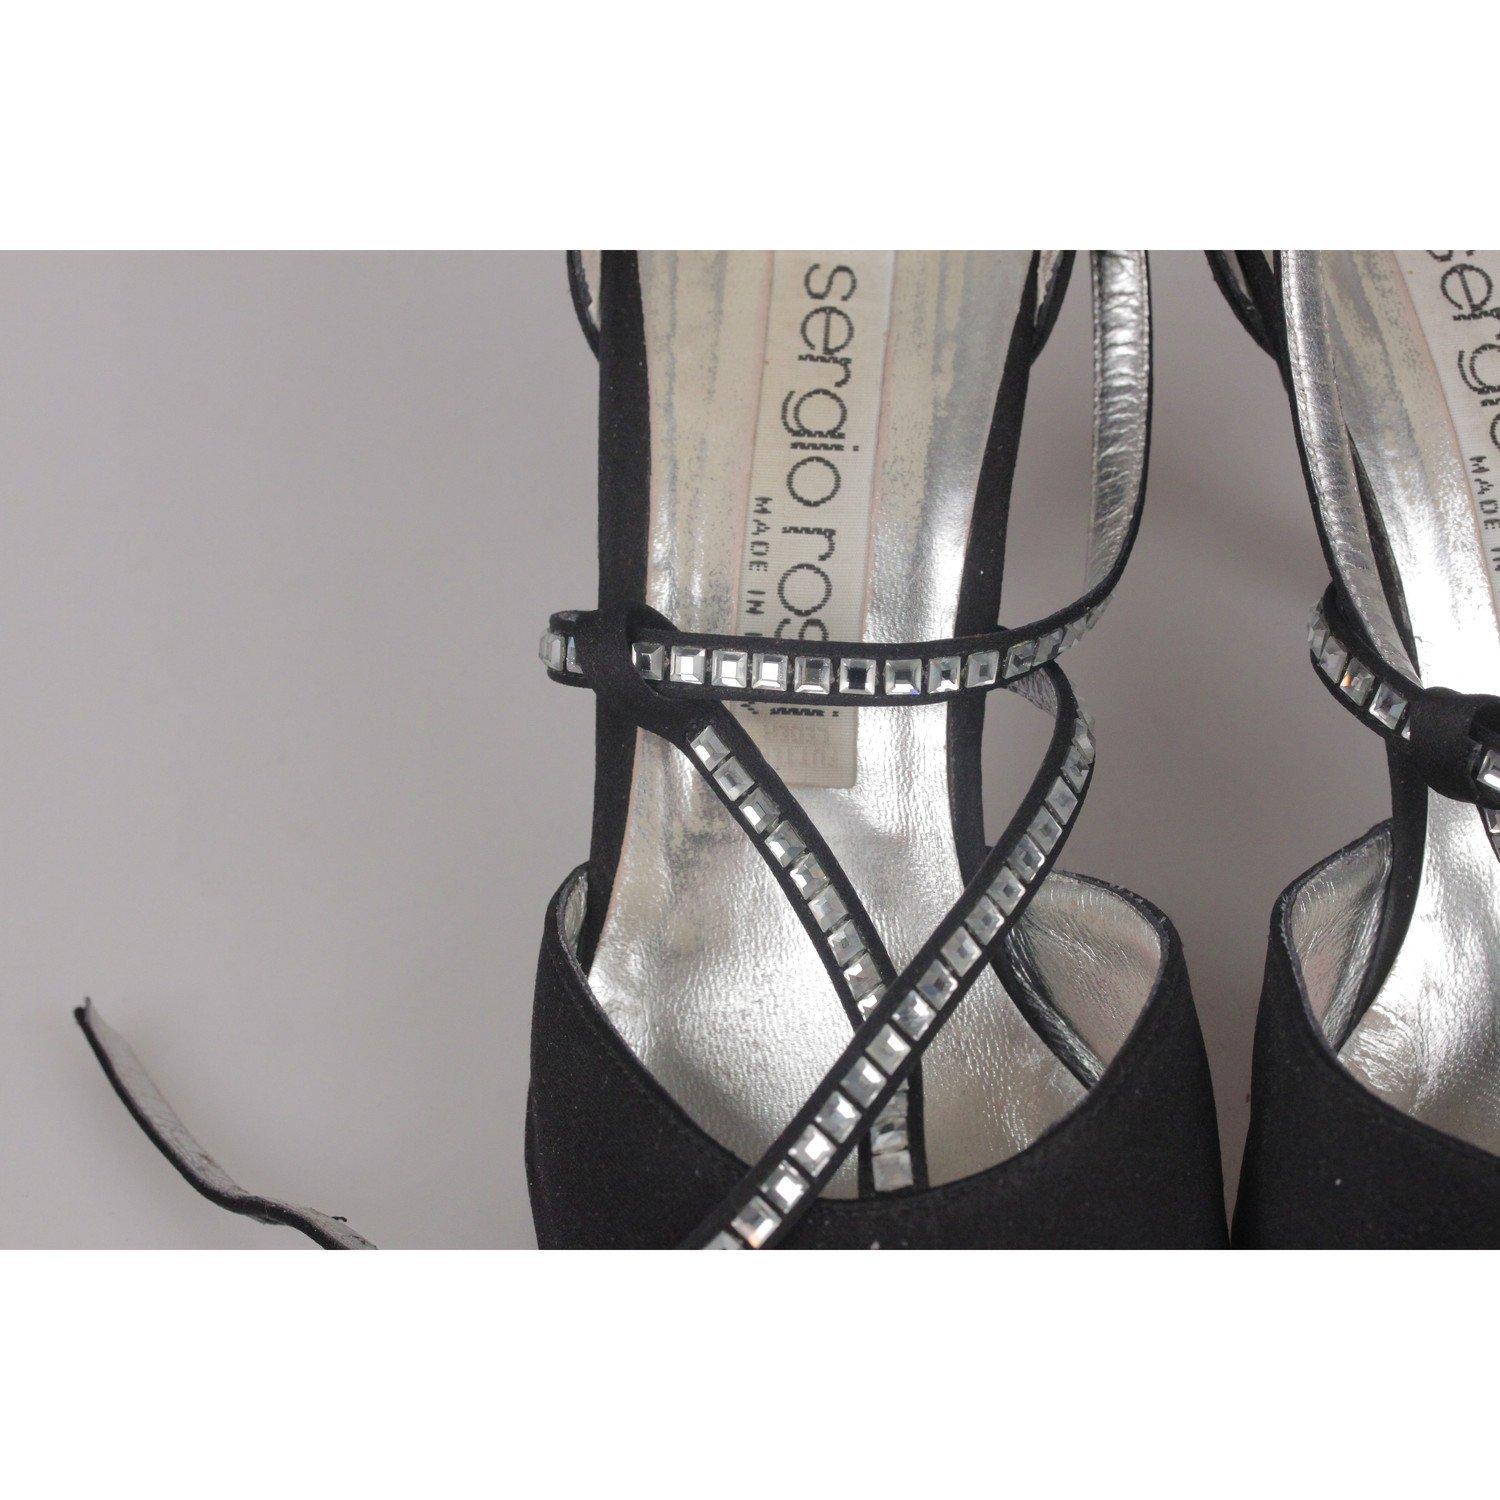 Women's SERGIO ROSSI BlackFabric D'Orsay Shoes HEELS PUMPS with Crystals 36 IT